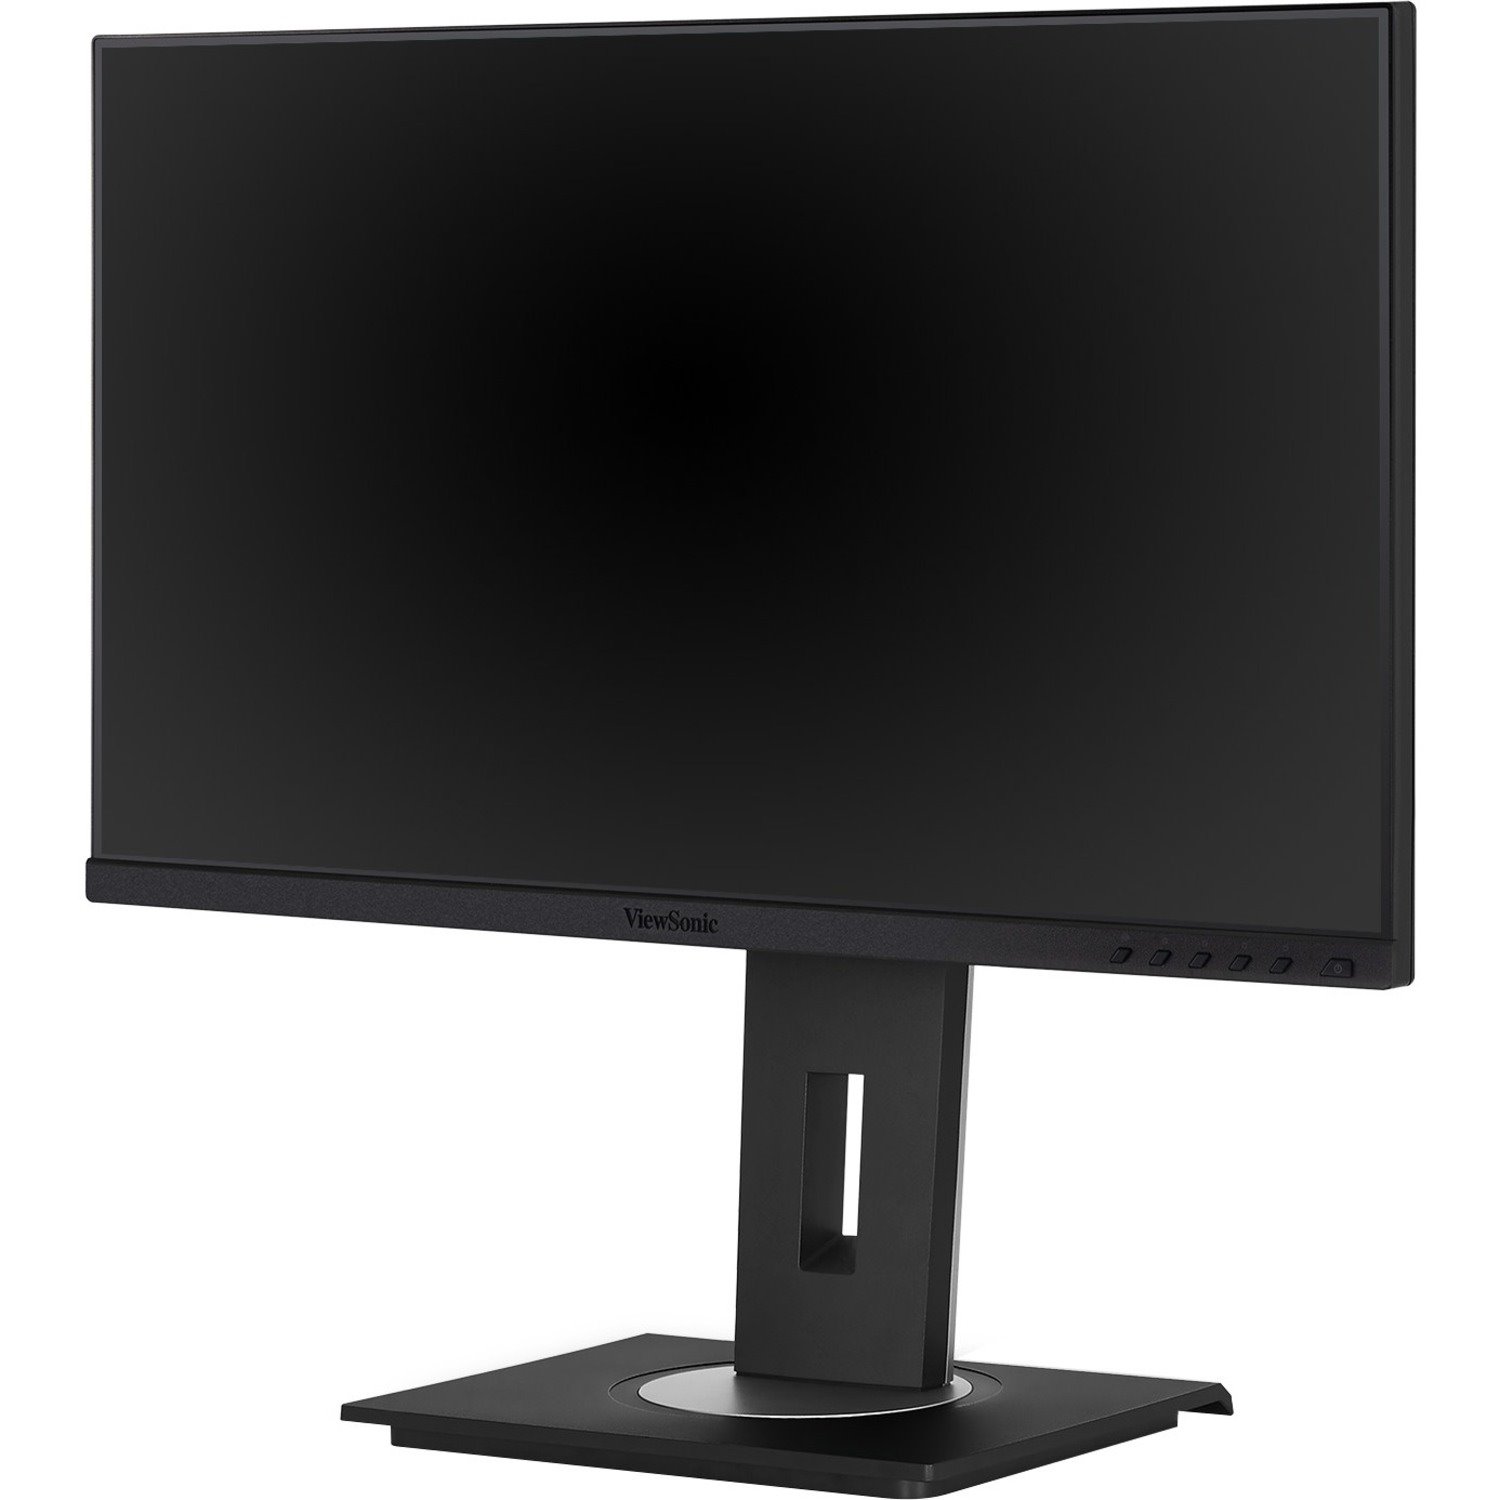 Viewsonic VG2455 61 cm (24") Full HD WLED LCD Monitor - 16:9 - Black